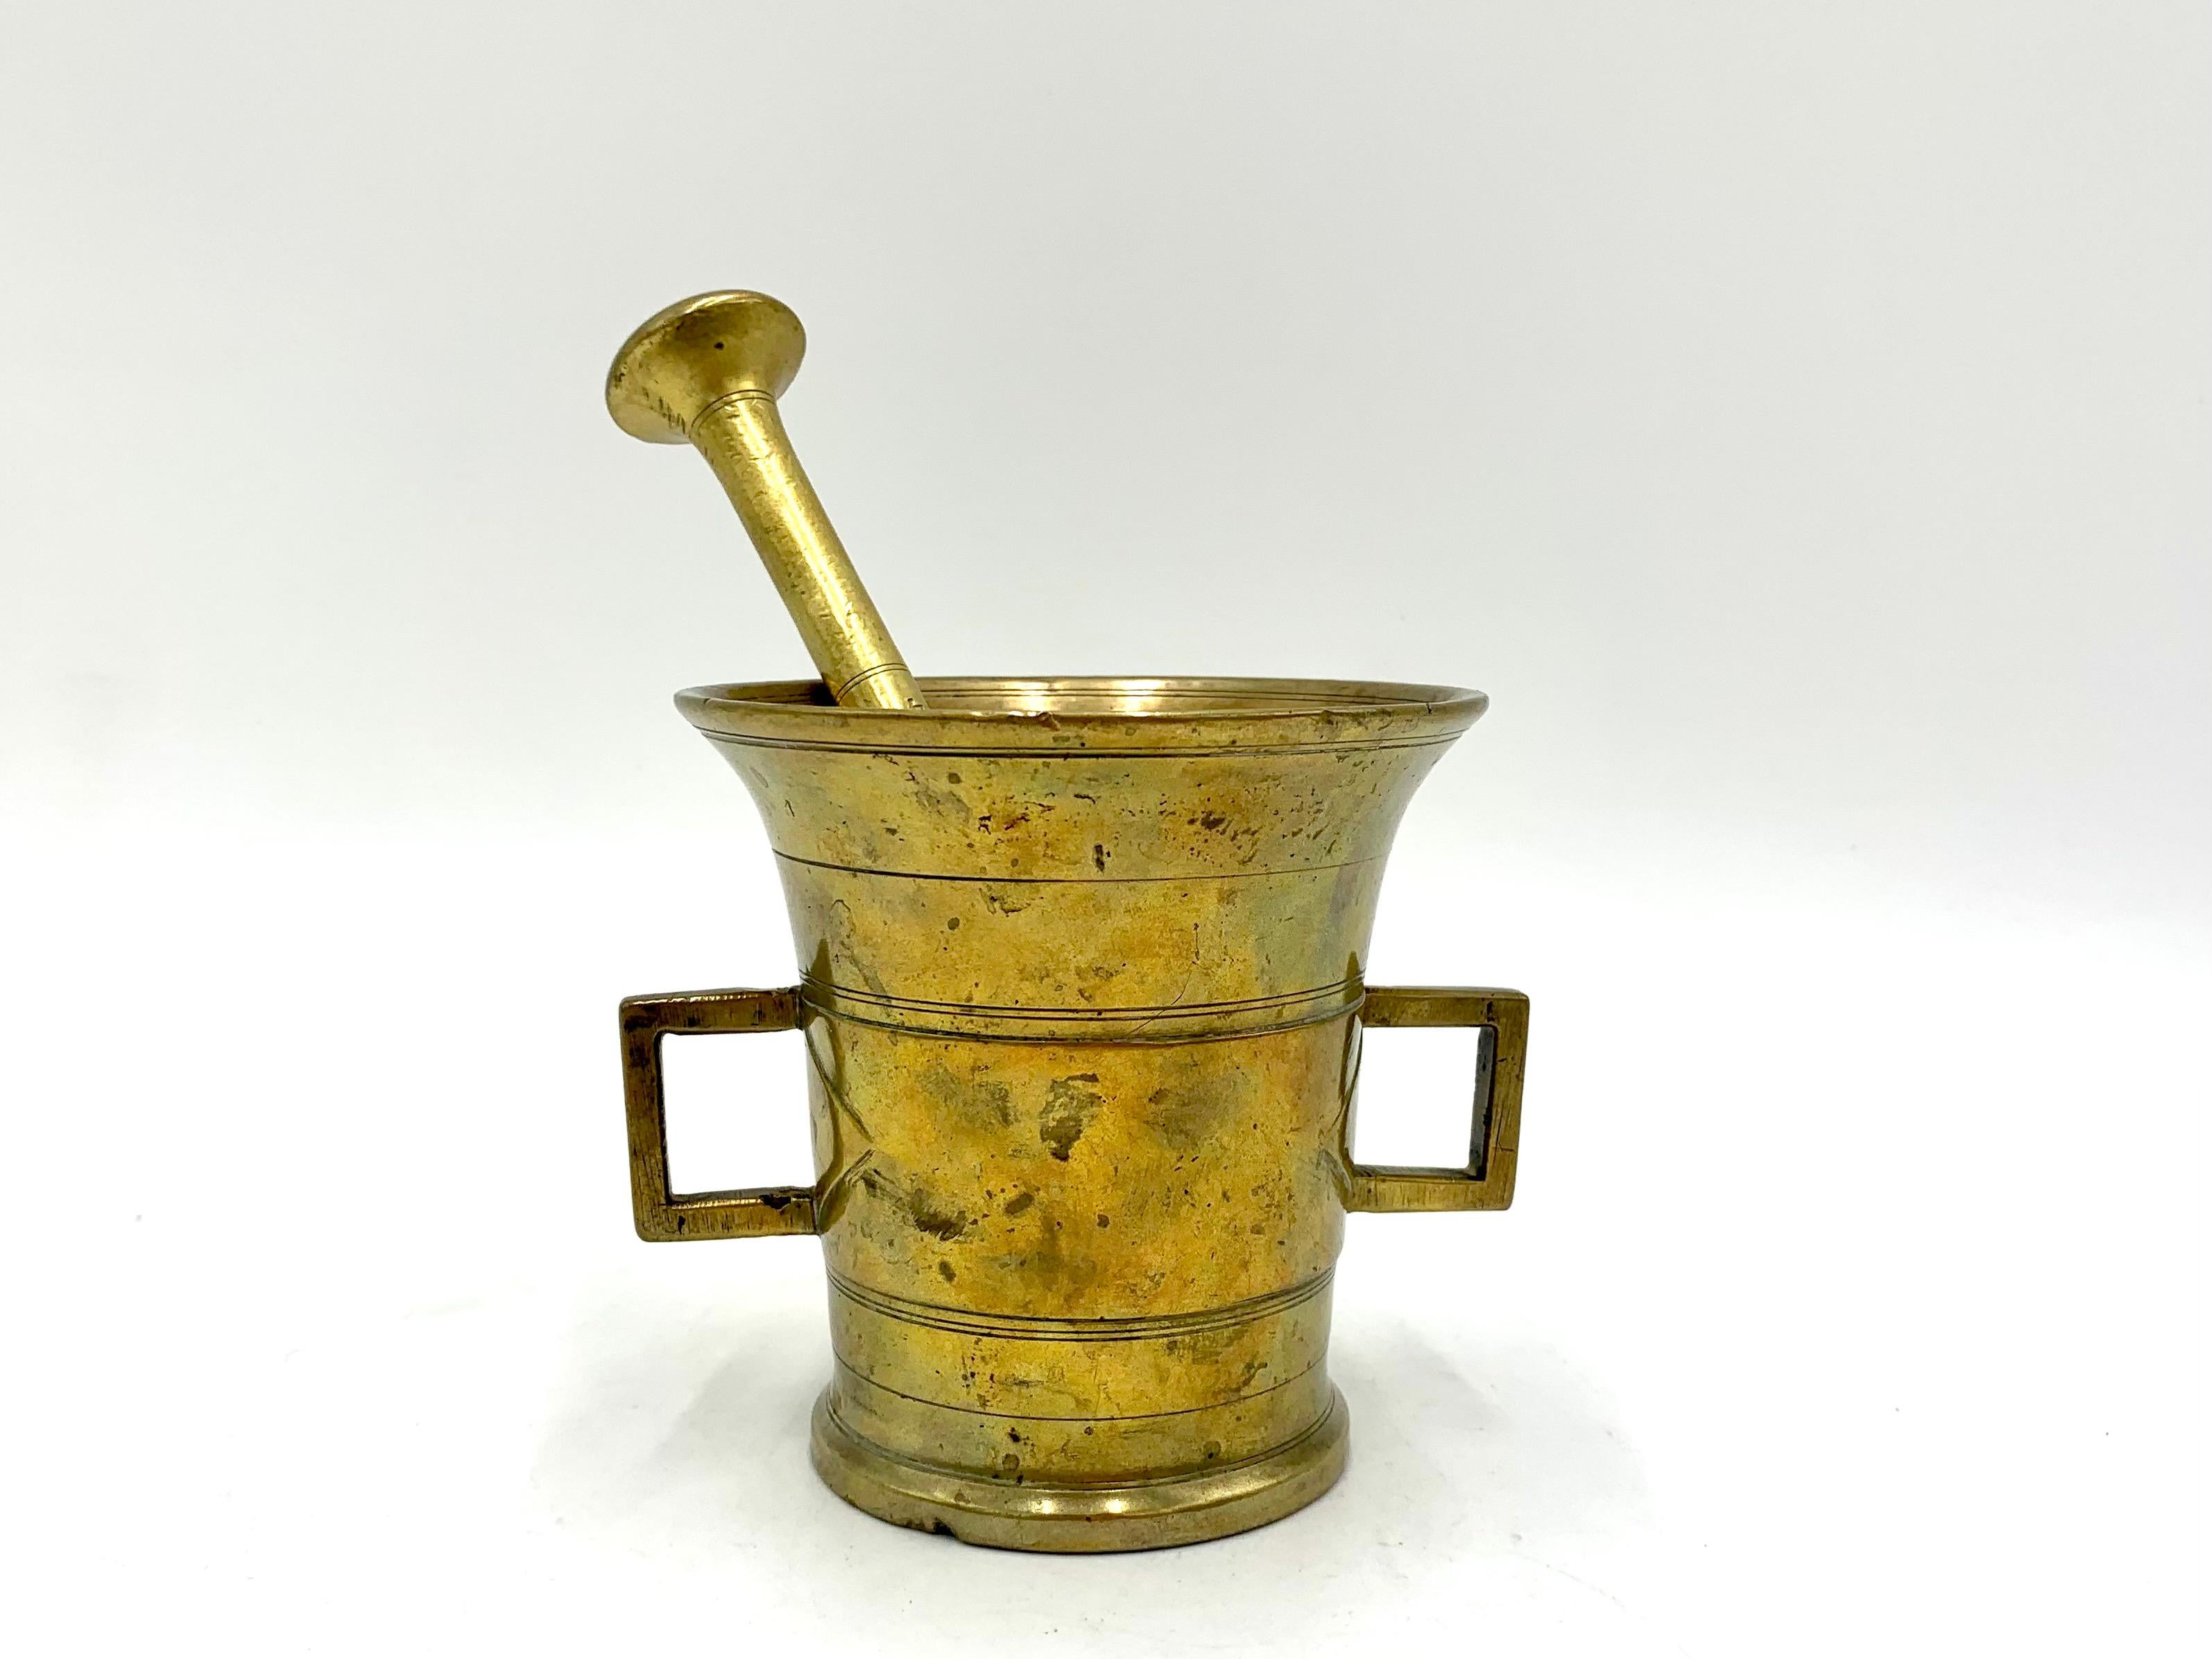 Brass mortar and pestle

Measures: height 10cm, diameter 10cm.

